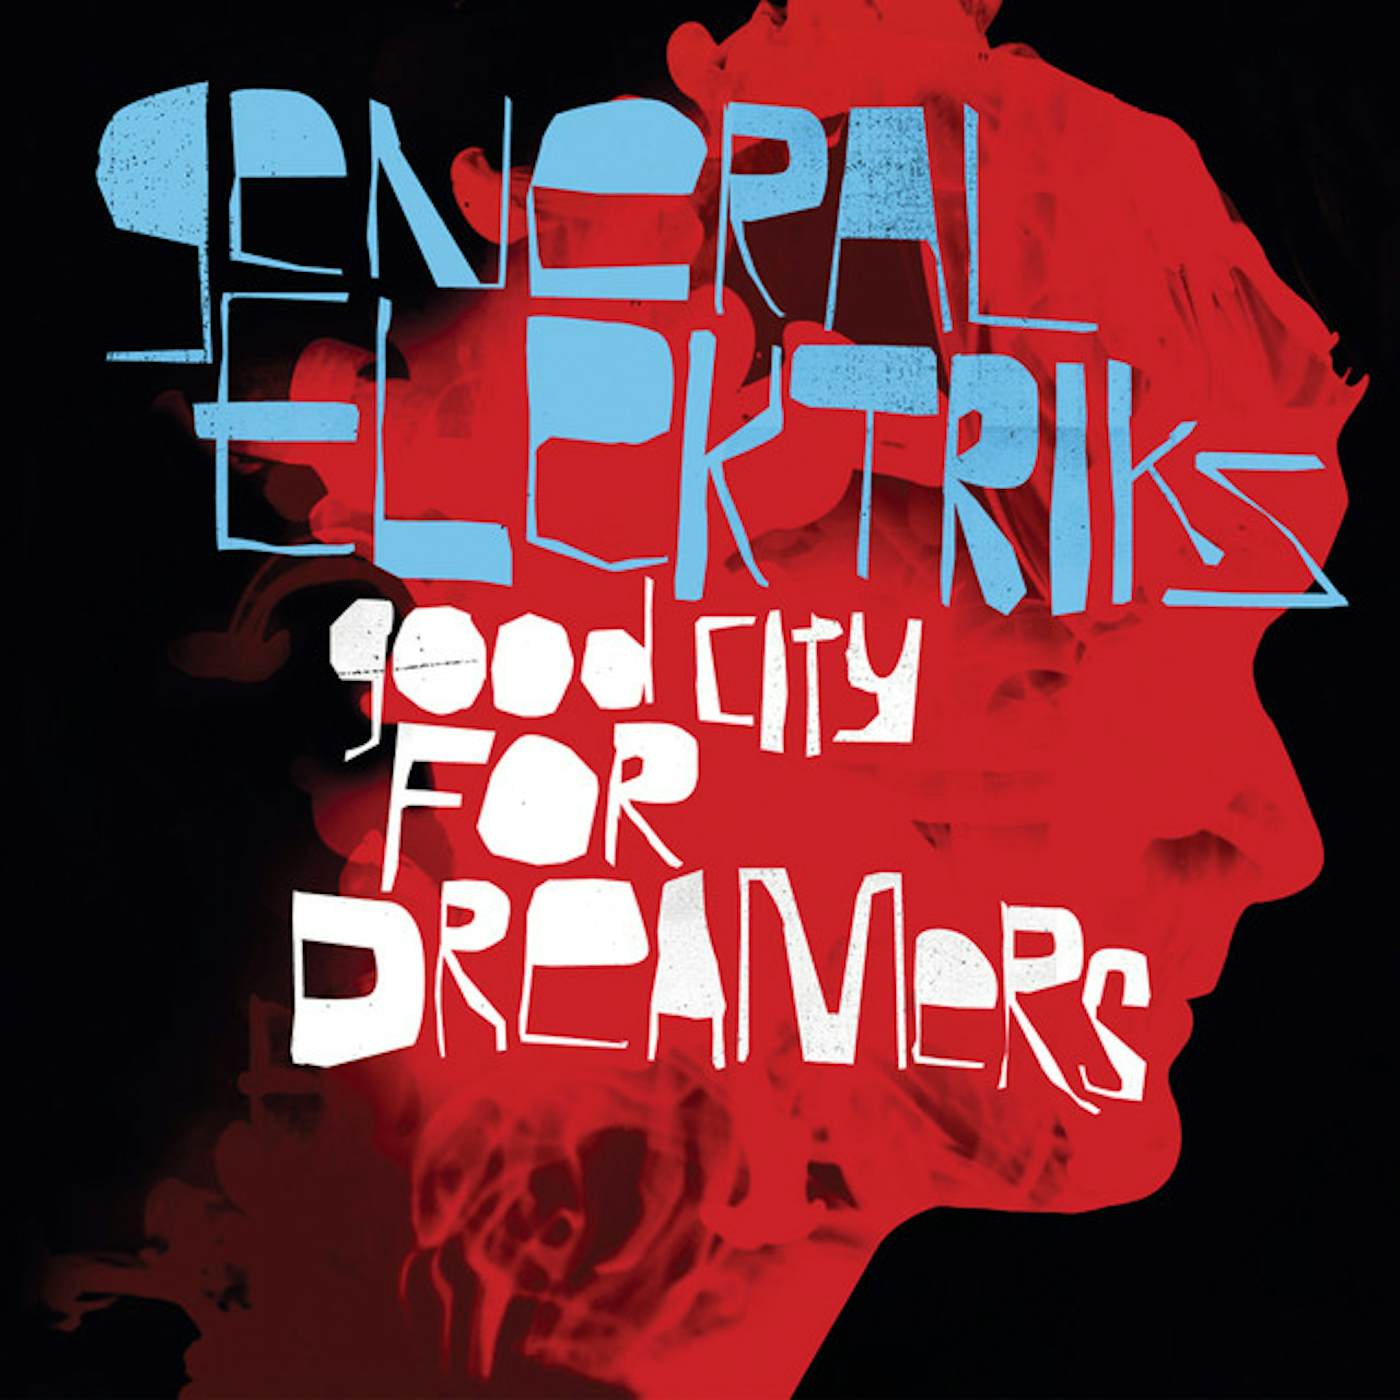 General Elektriks Good City For Dreamers Vinyl Record